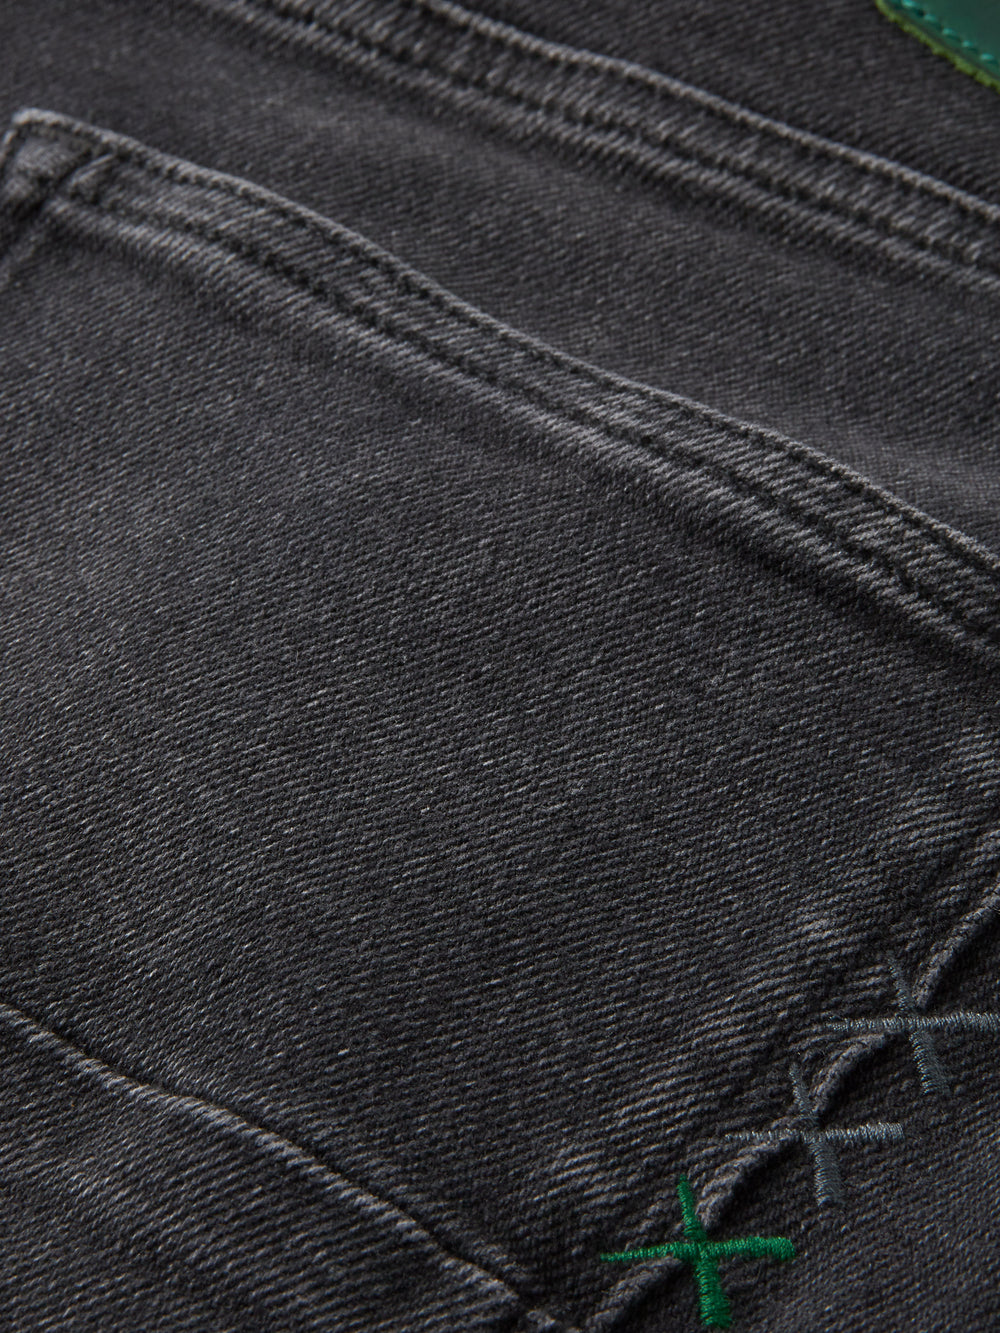 The Skim super-slim fit jeans - Matchmaker - Scotch & Soda NZ